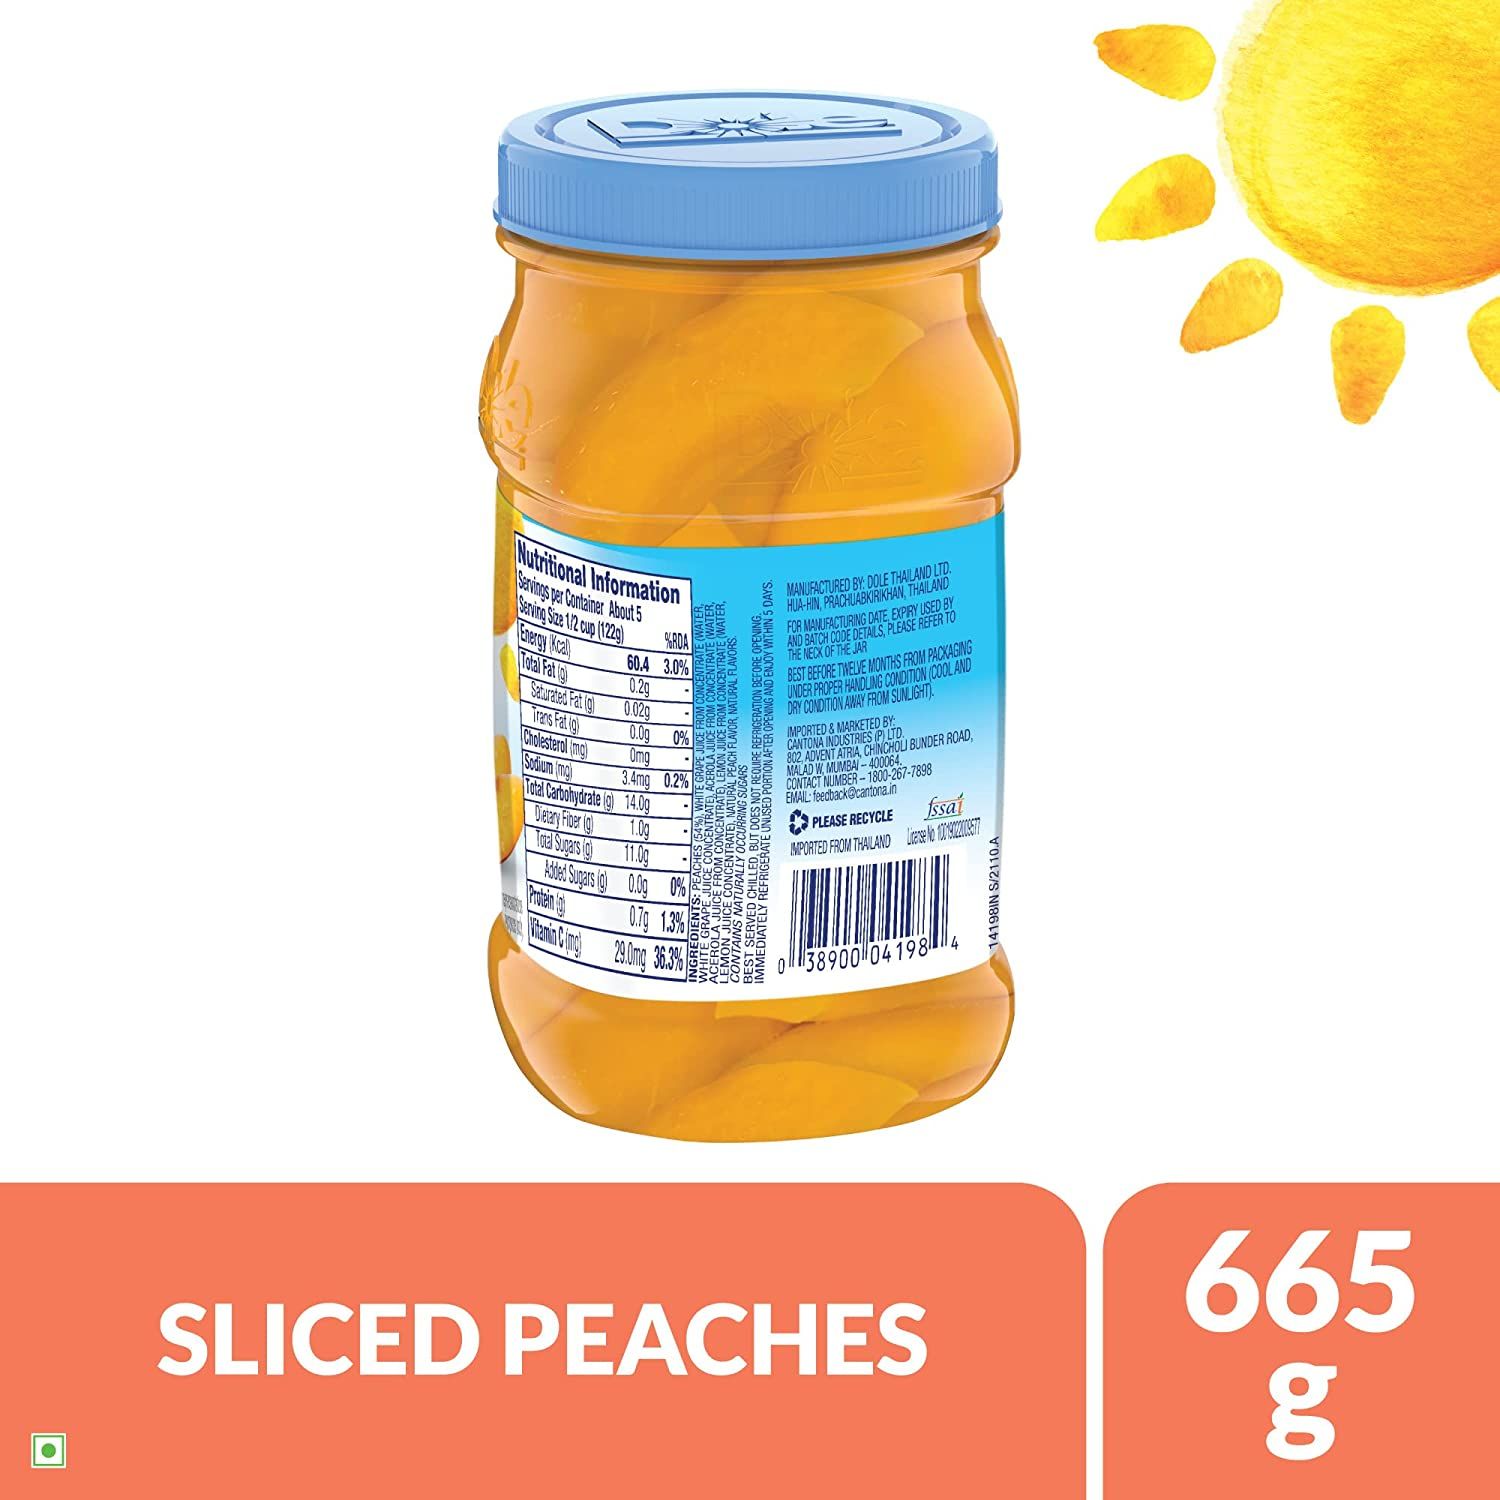 Dole Sliced Peaches Image